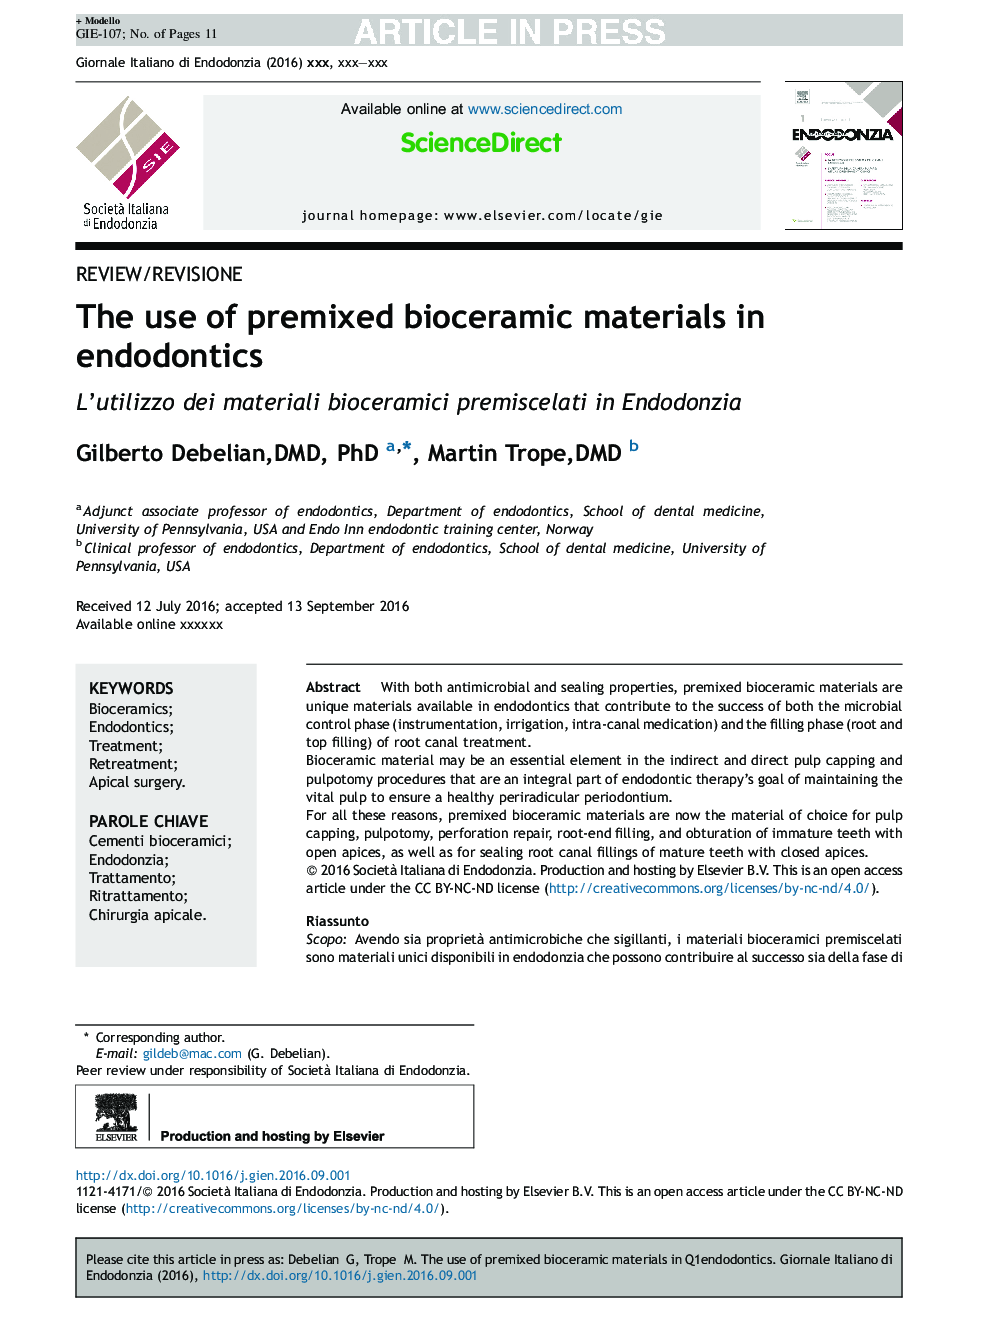 The use of premixed bioceramic materials in endodontics